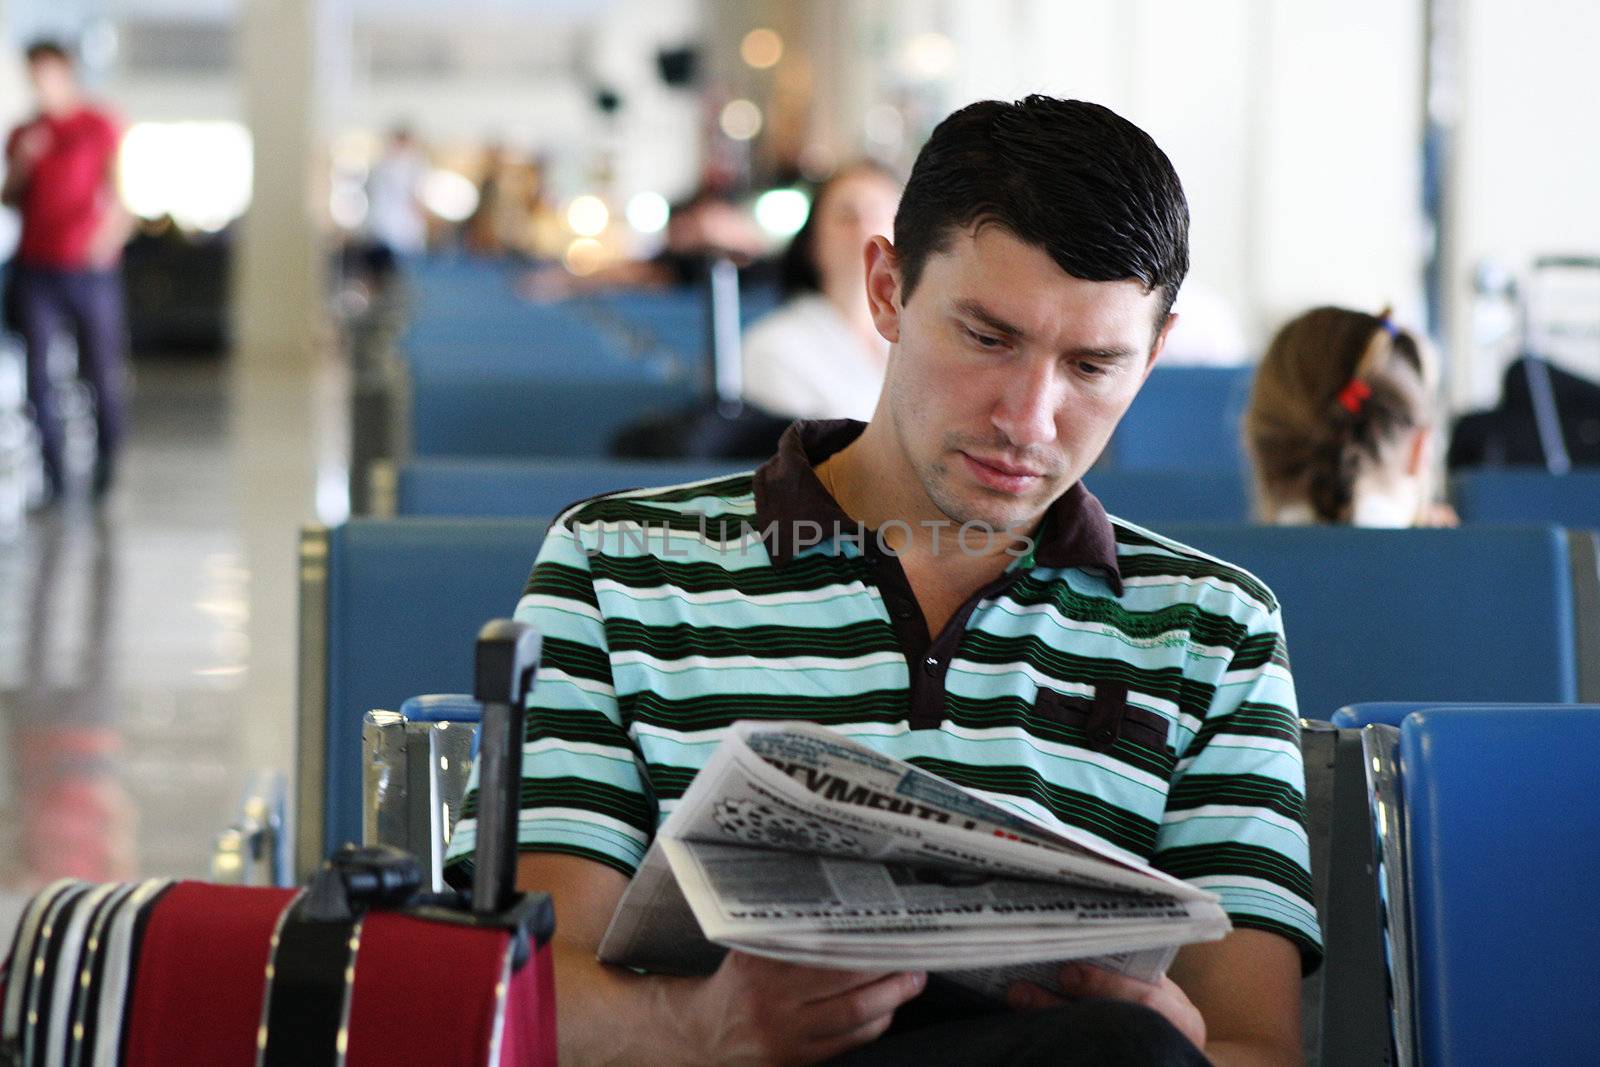 Man reading by photochecker